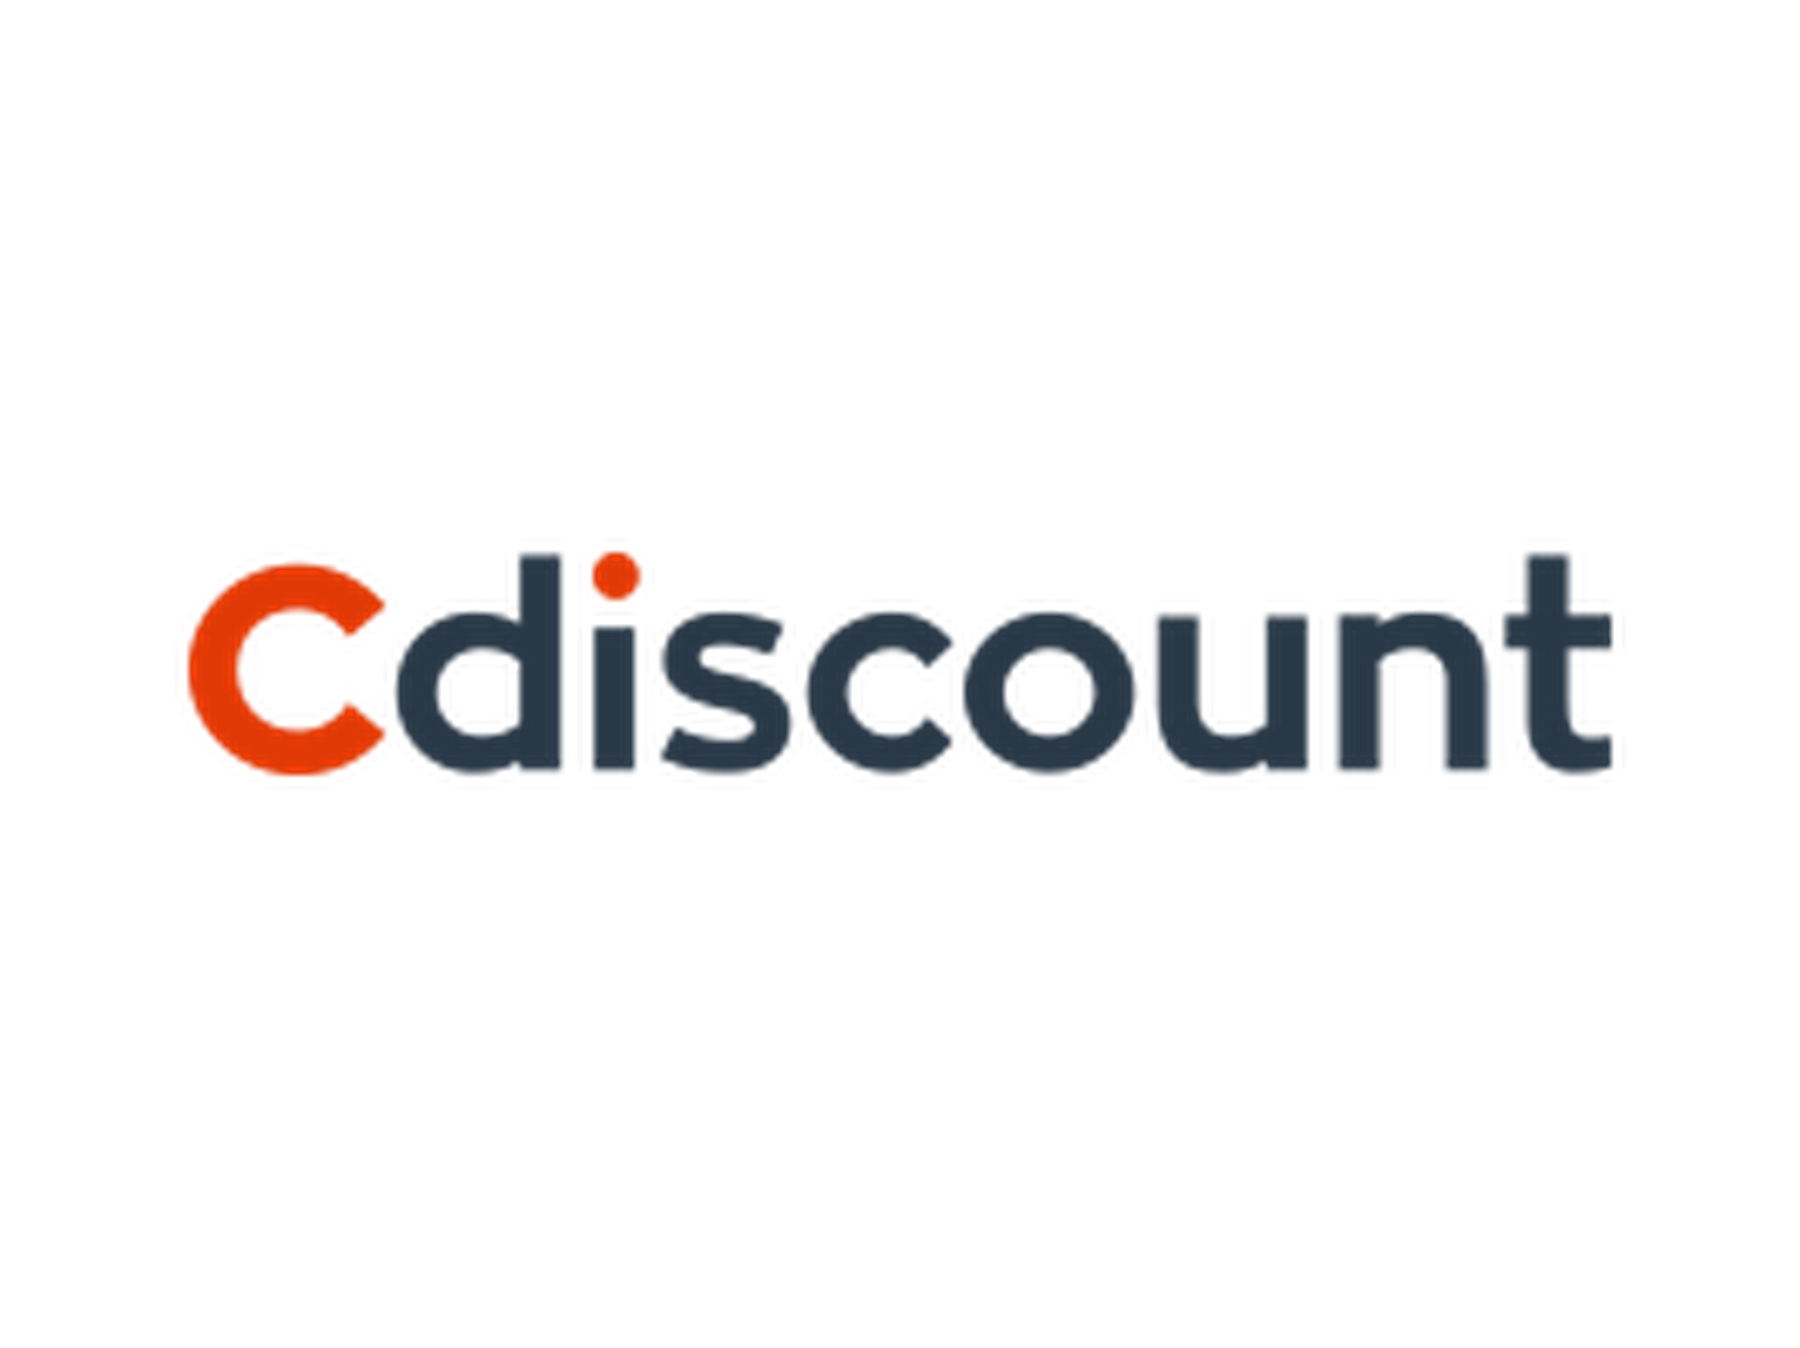 codes promo Cdiscount